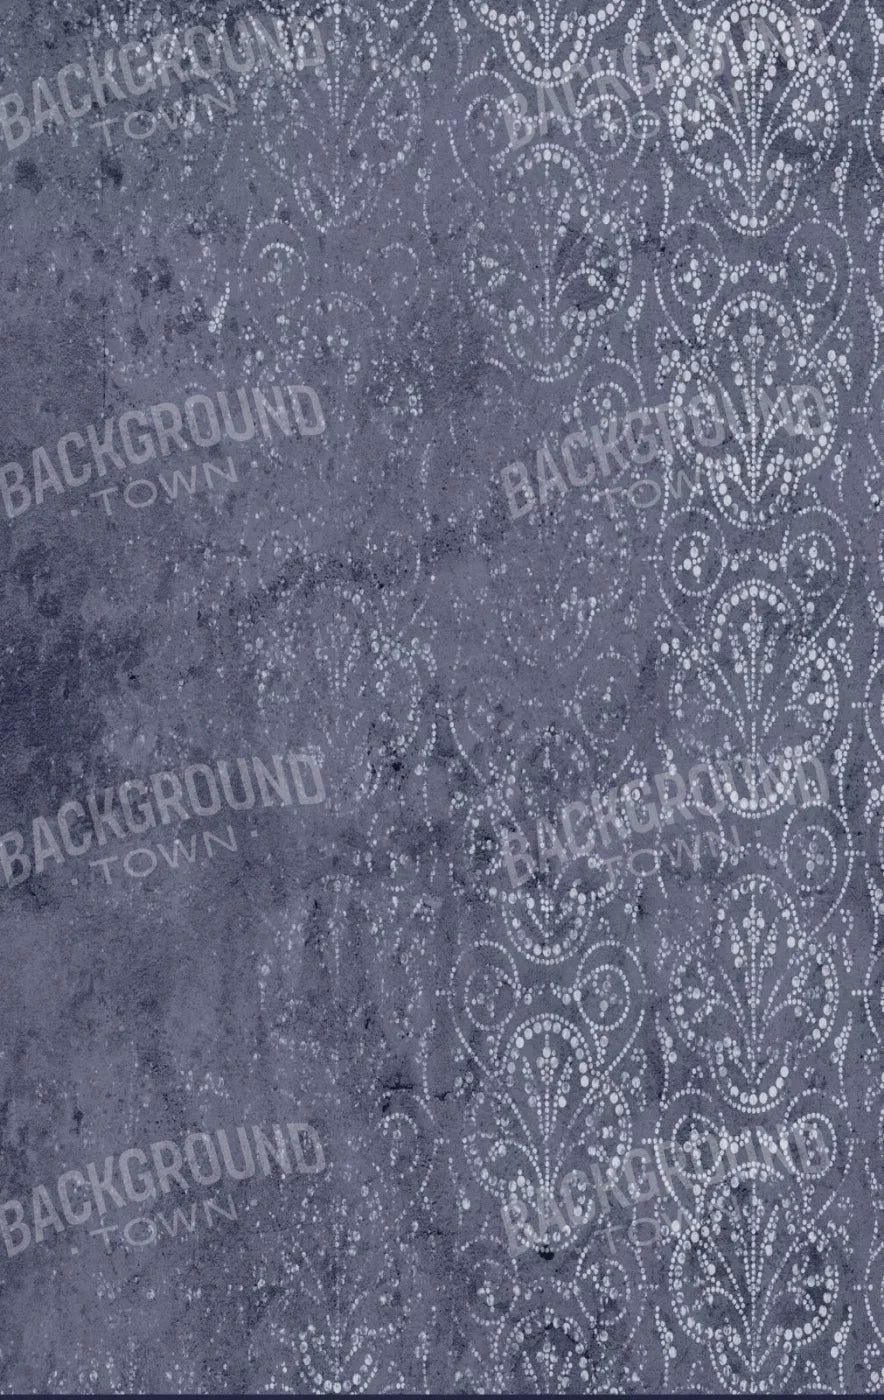 Denim Grunge 10X16 Ultracloth ( 120 X 192 Inch ) Backdrop